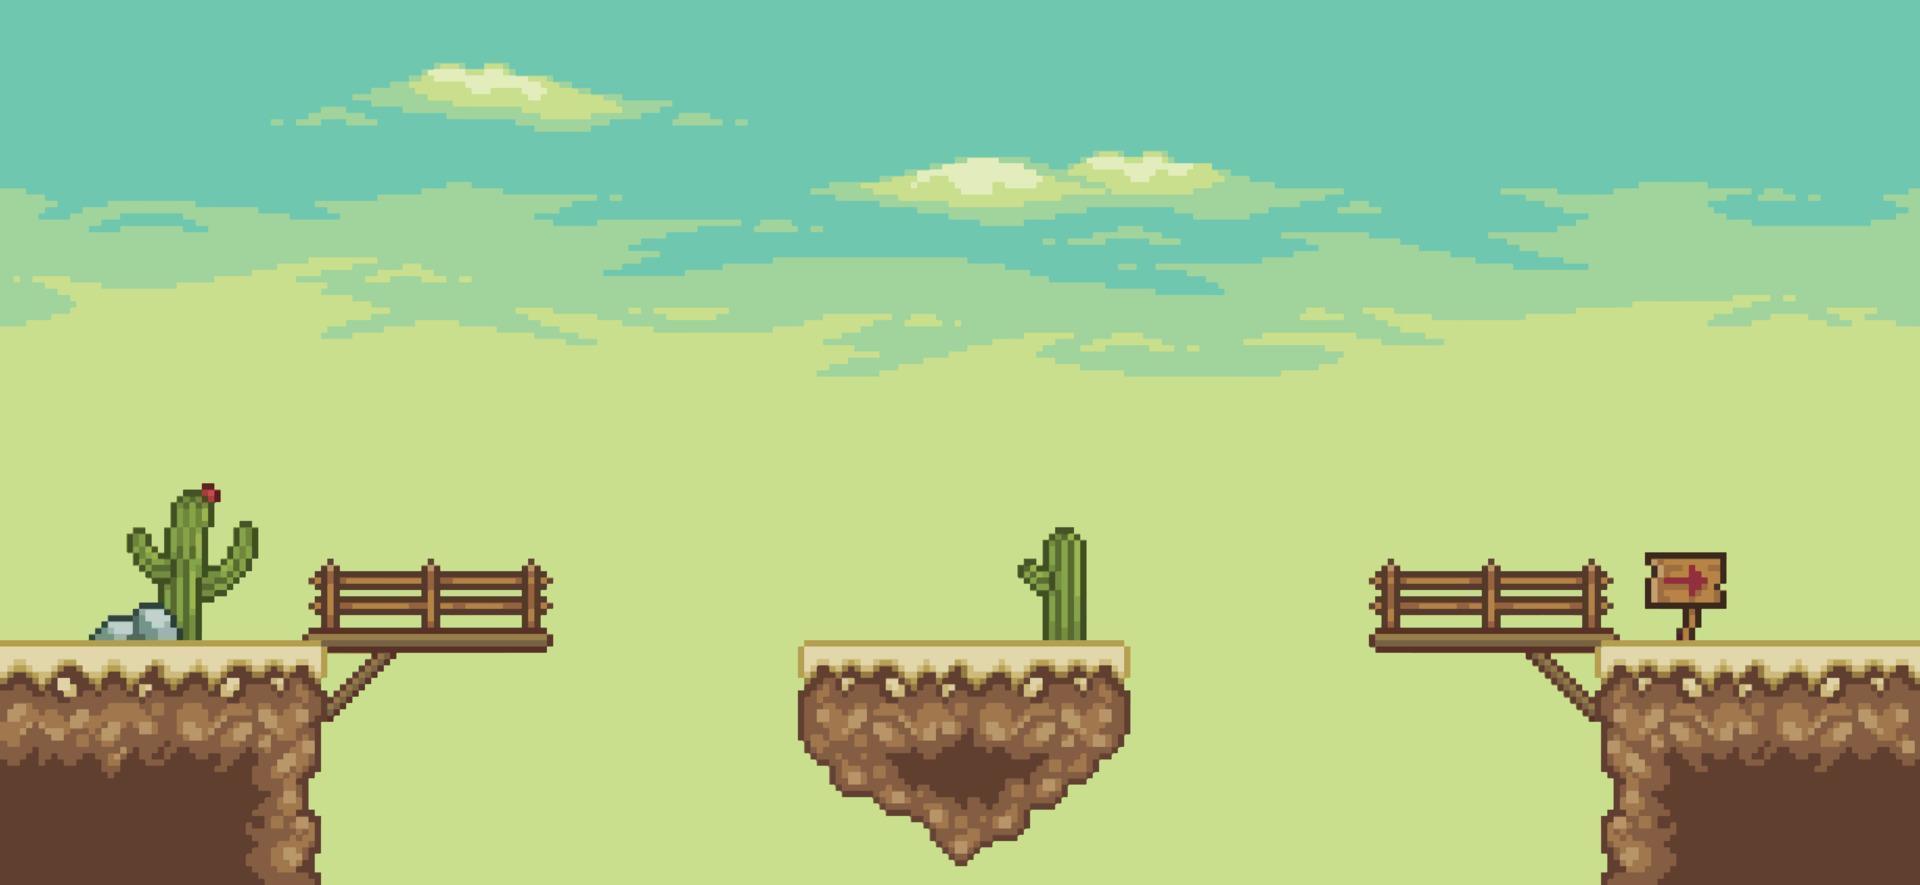 pixel art ökenspelscen med kaktusar, bro, flytande ö 8bit landskapsbakgrund vektor